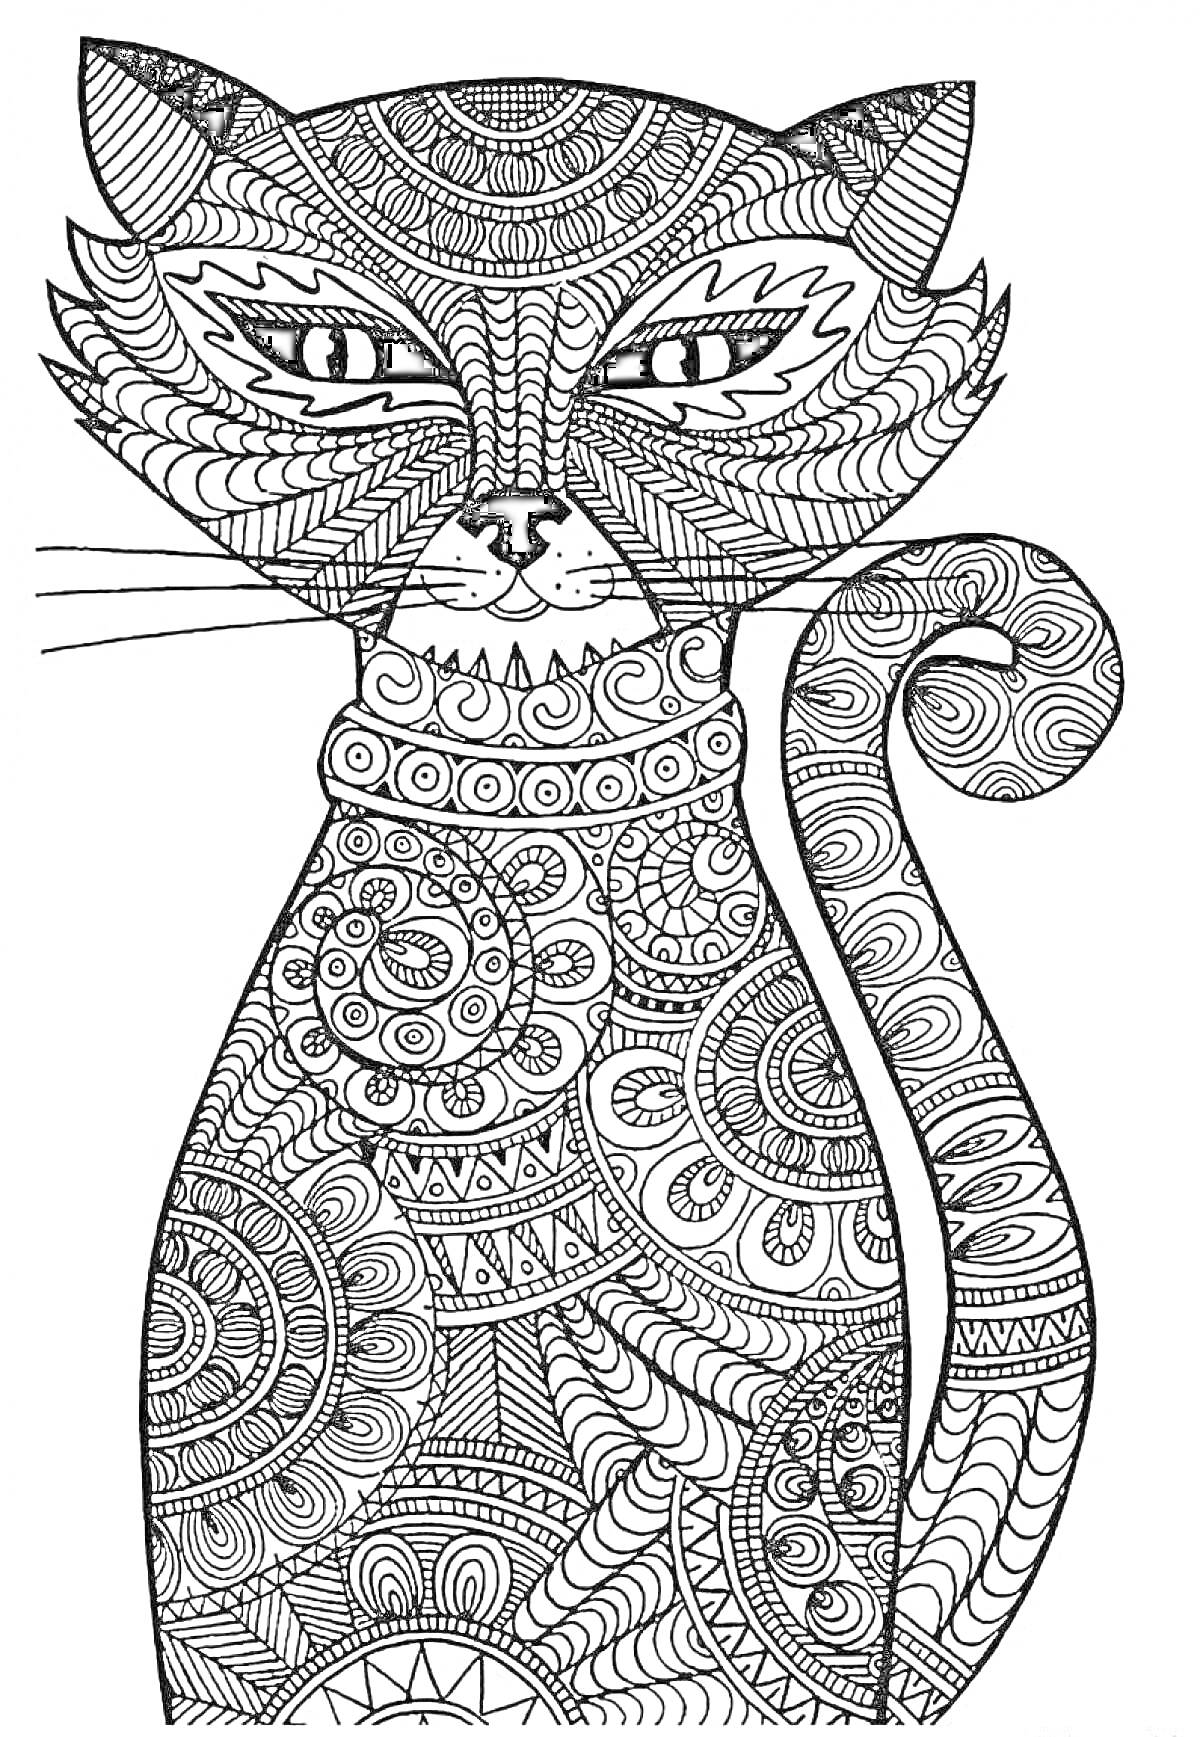 Раскраска Арт кот с орнаментом и узорами